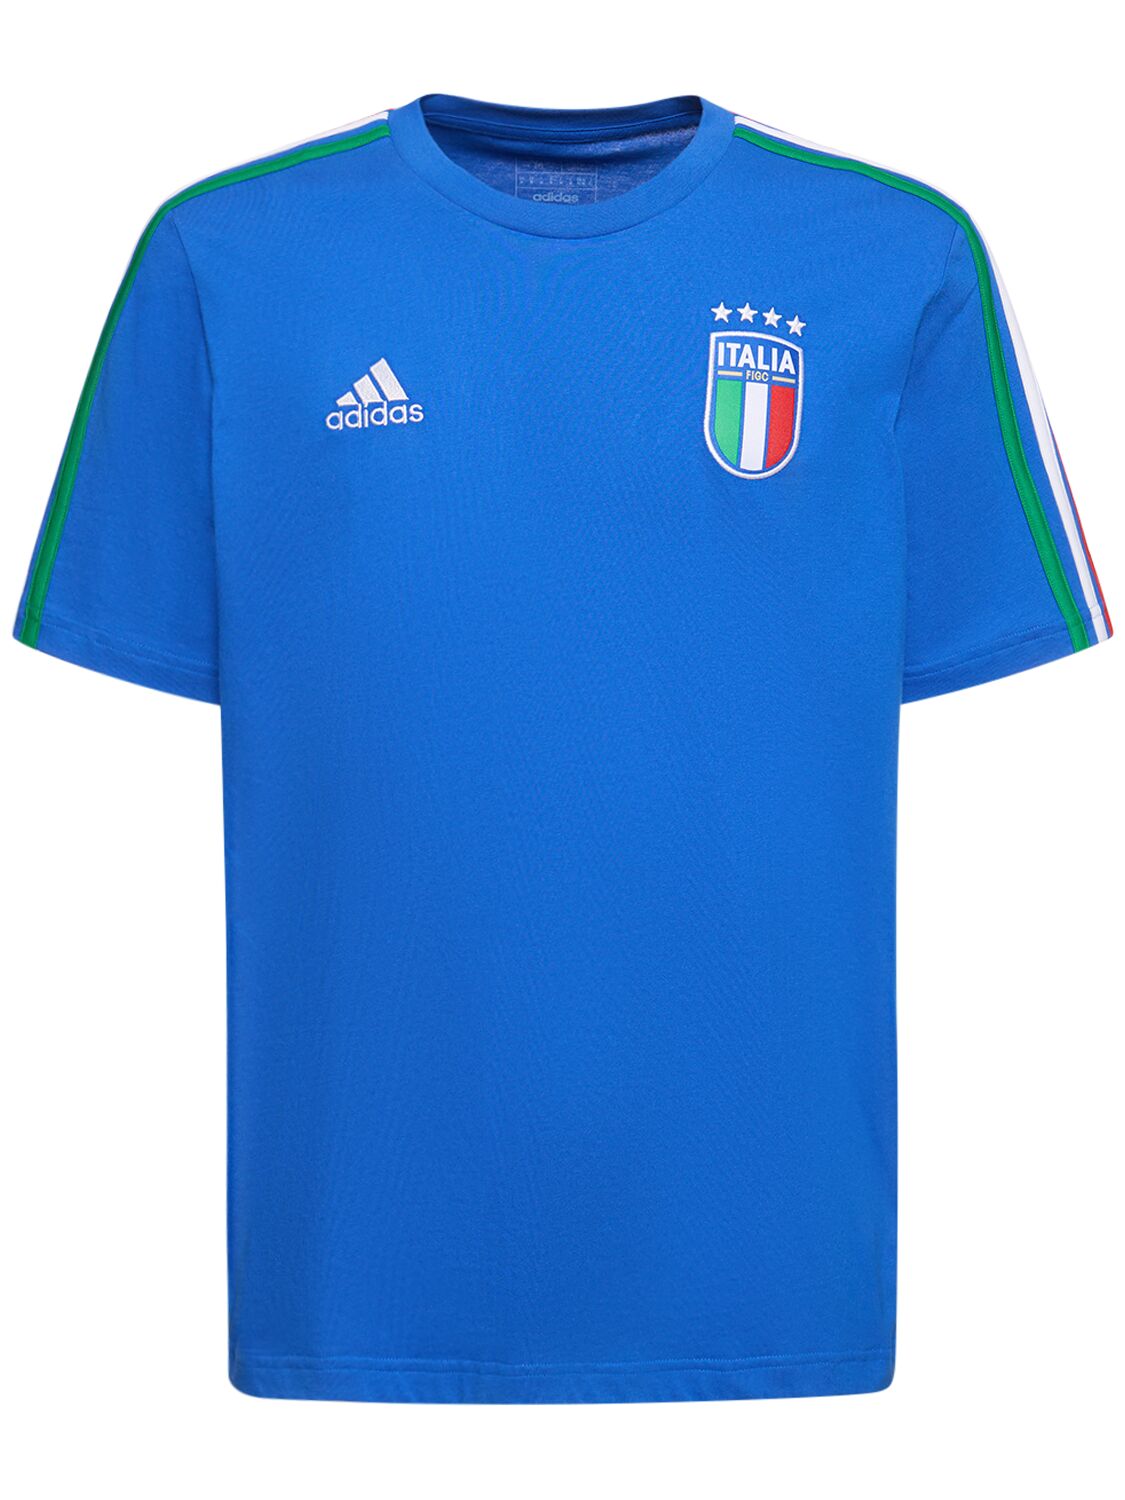 Adidas Originals Italy T-shirt In Blue